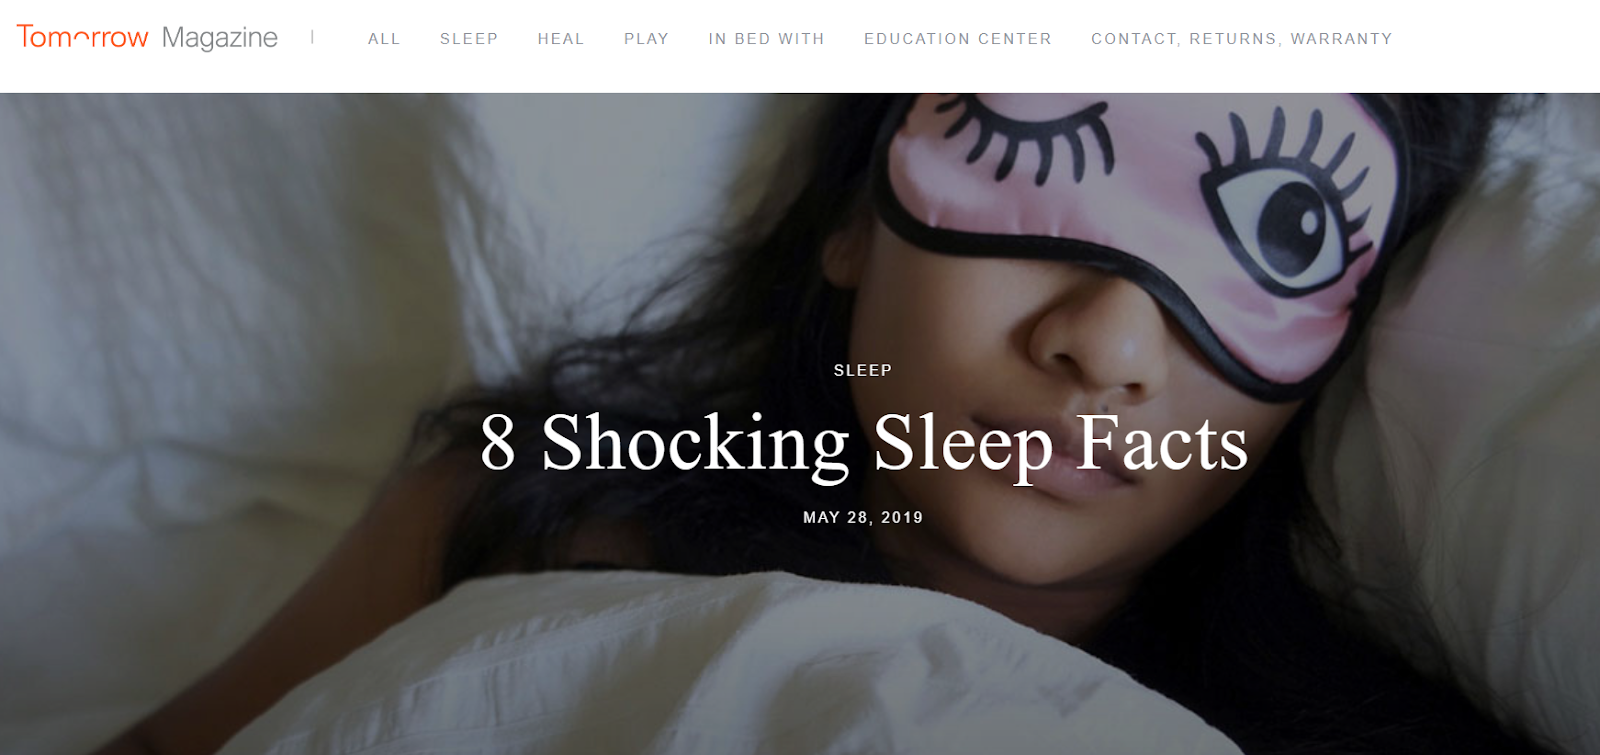 Tomorrow Sleep uses AI to create lots of content